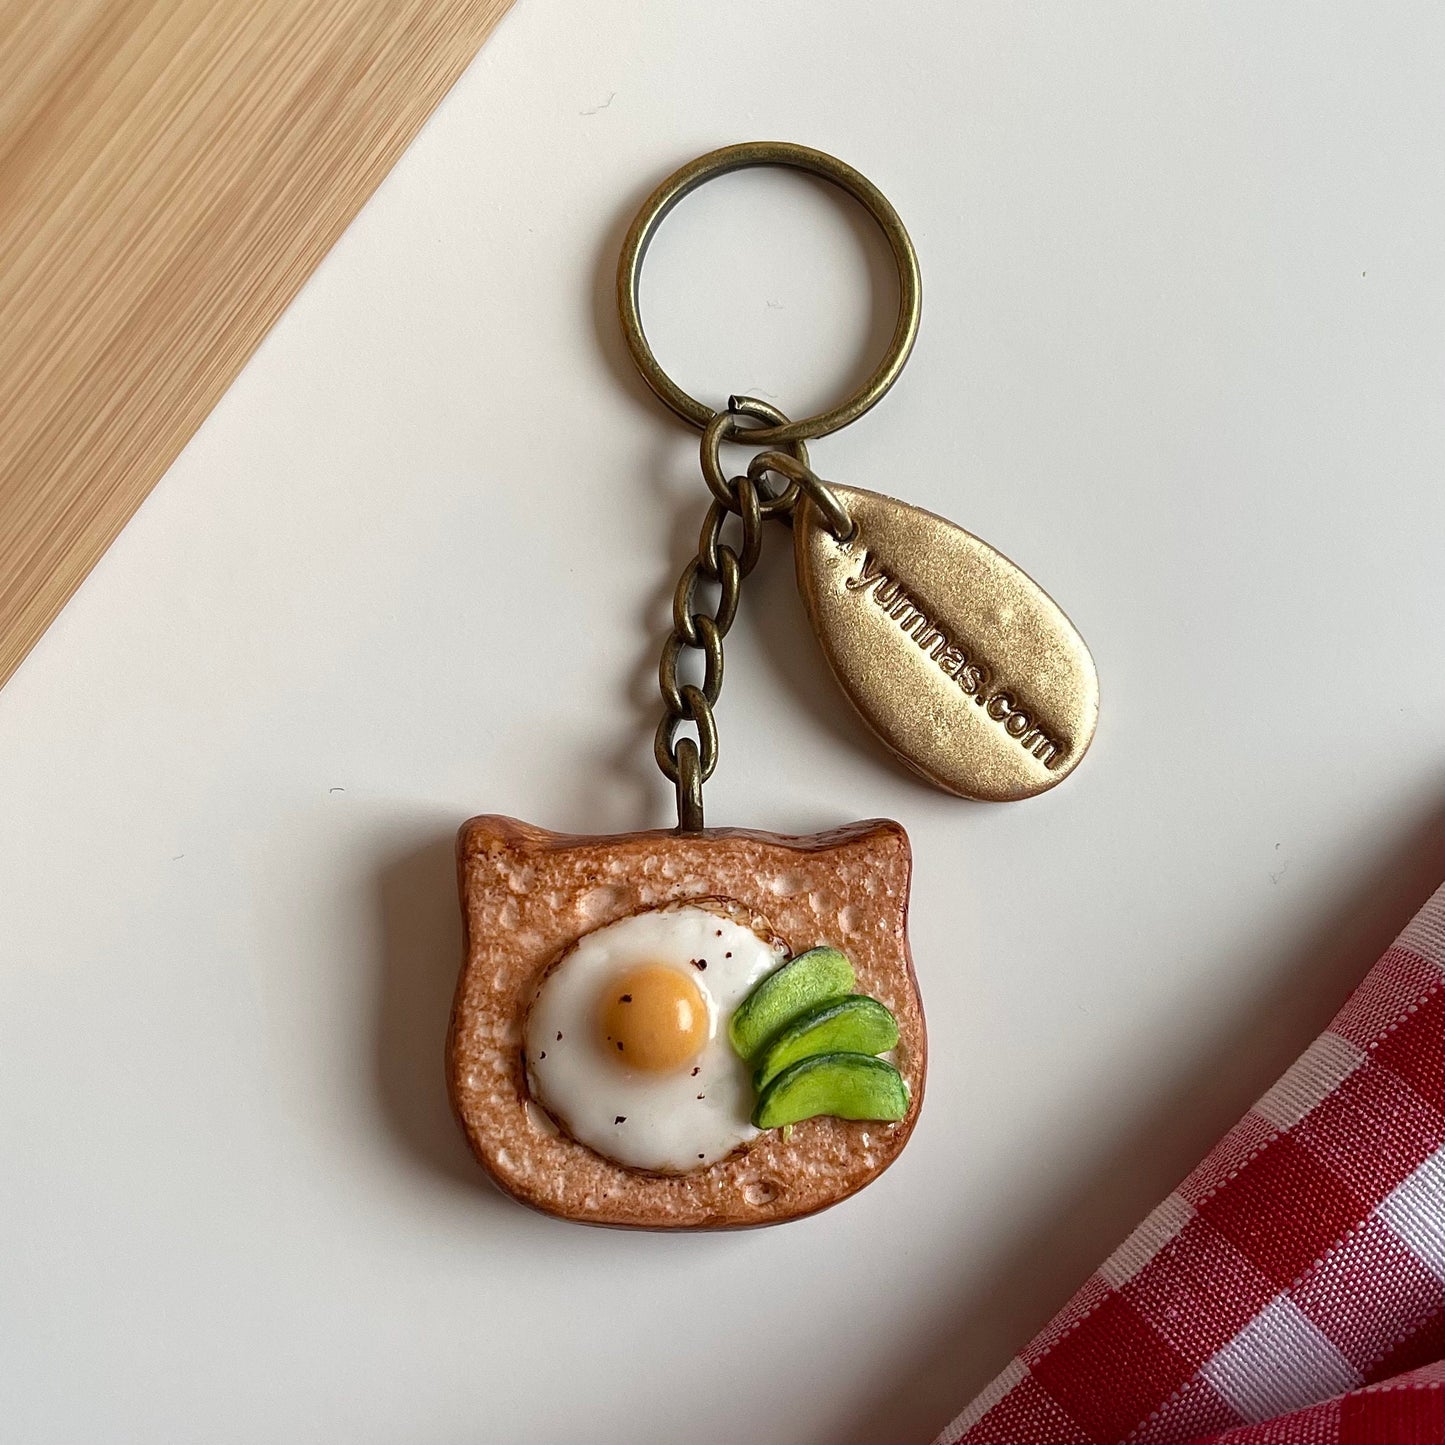 Bread toast keychain, egg on toast with avocados keychain, avocado and toast keyring, polymerclay charm, clay keyring, realistic food charm